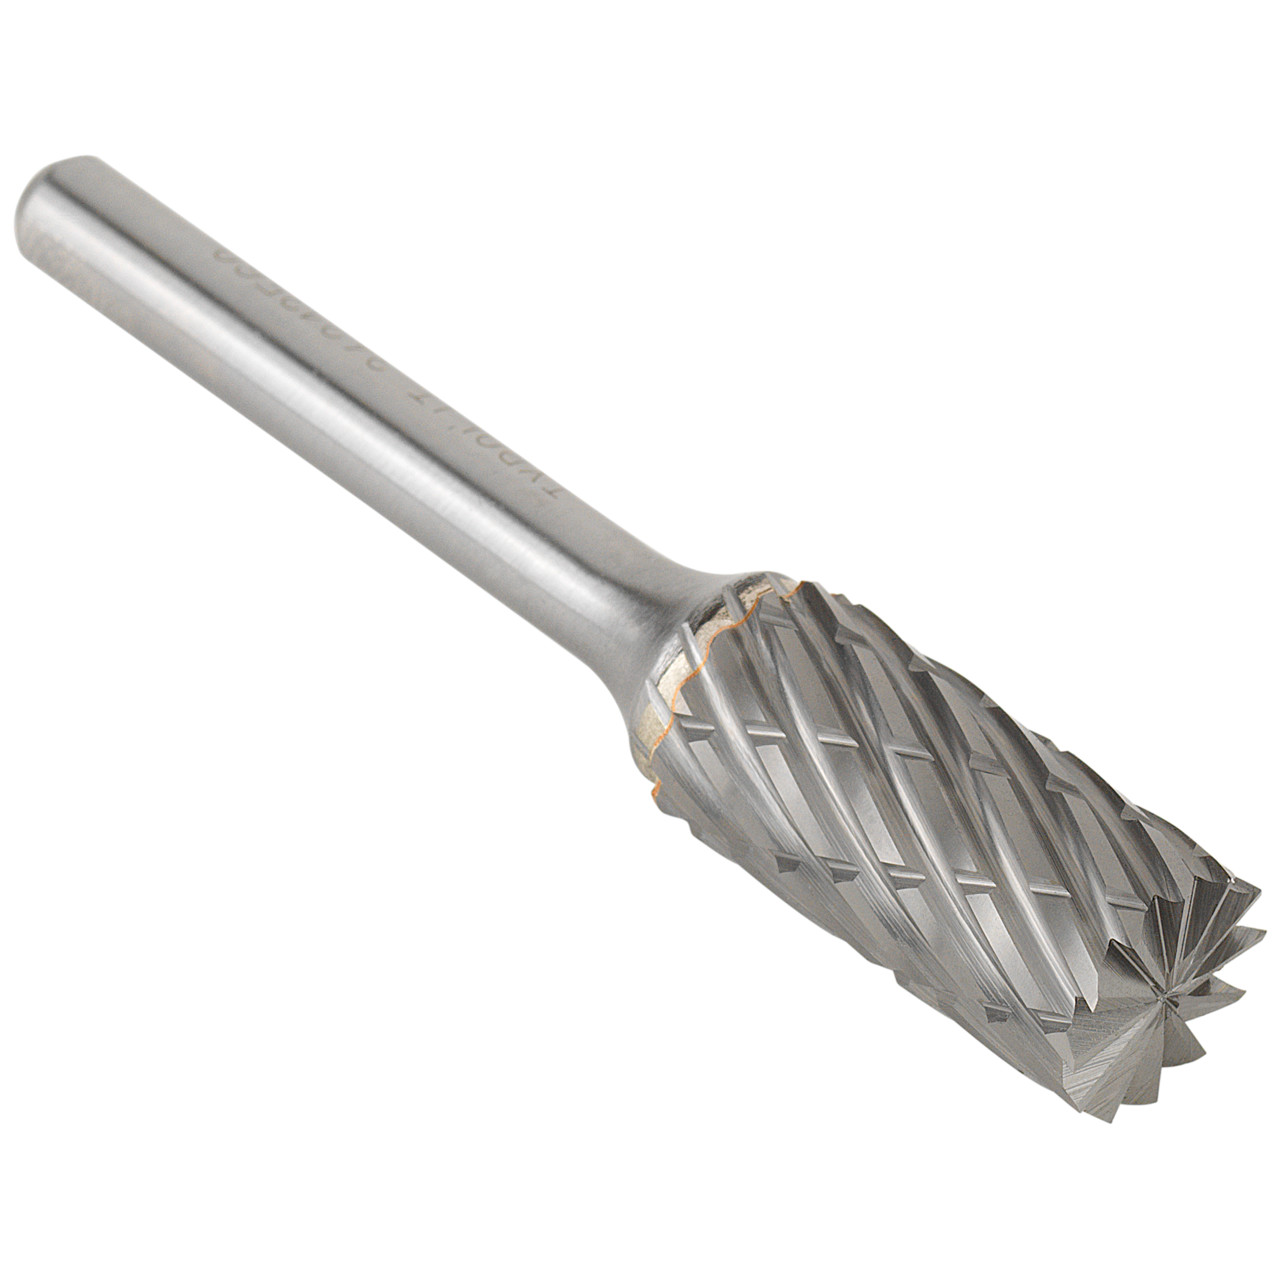 Tyrolit Fresa de metal duro DxT-SxL 6x18-6x50 Para acero, forma: 52ZYAS - cilindro con dentado frontal, Art. 34213557